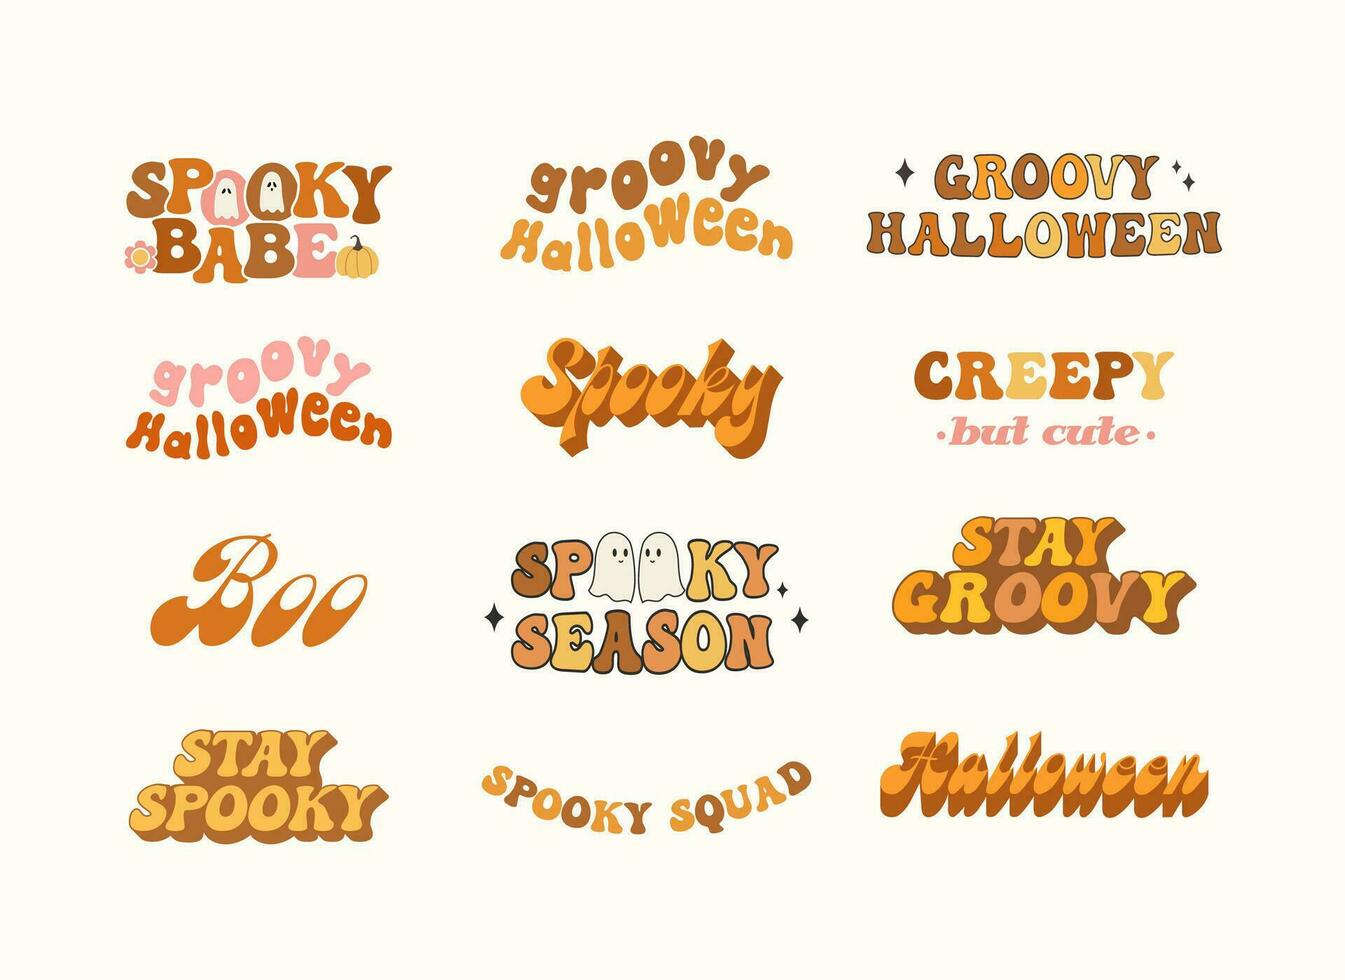 Halloween quotes. Retro groovy design. Stay Groovy, Boo, Spooky Season. Vector